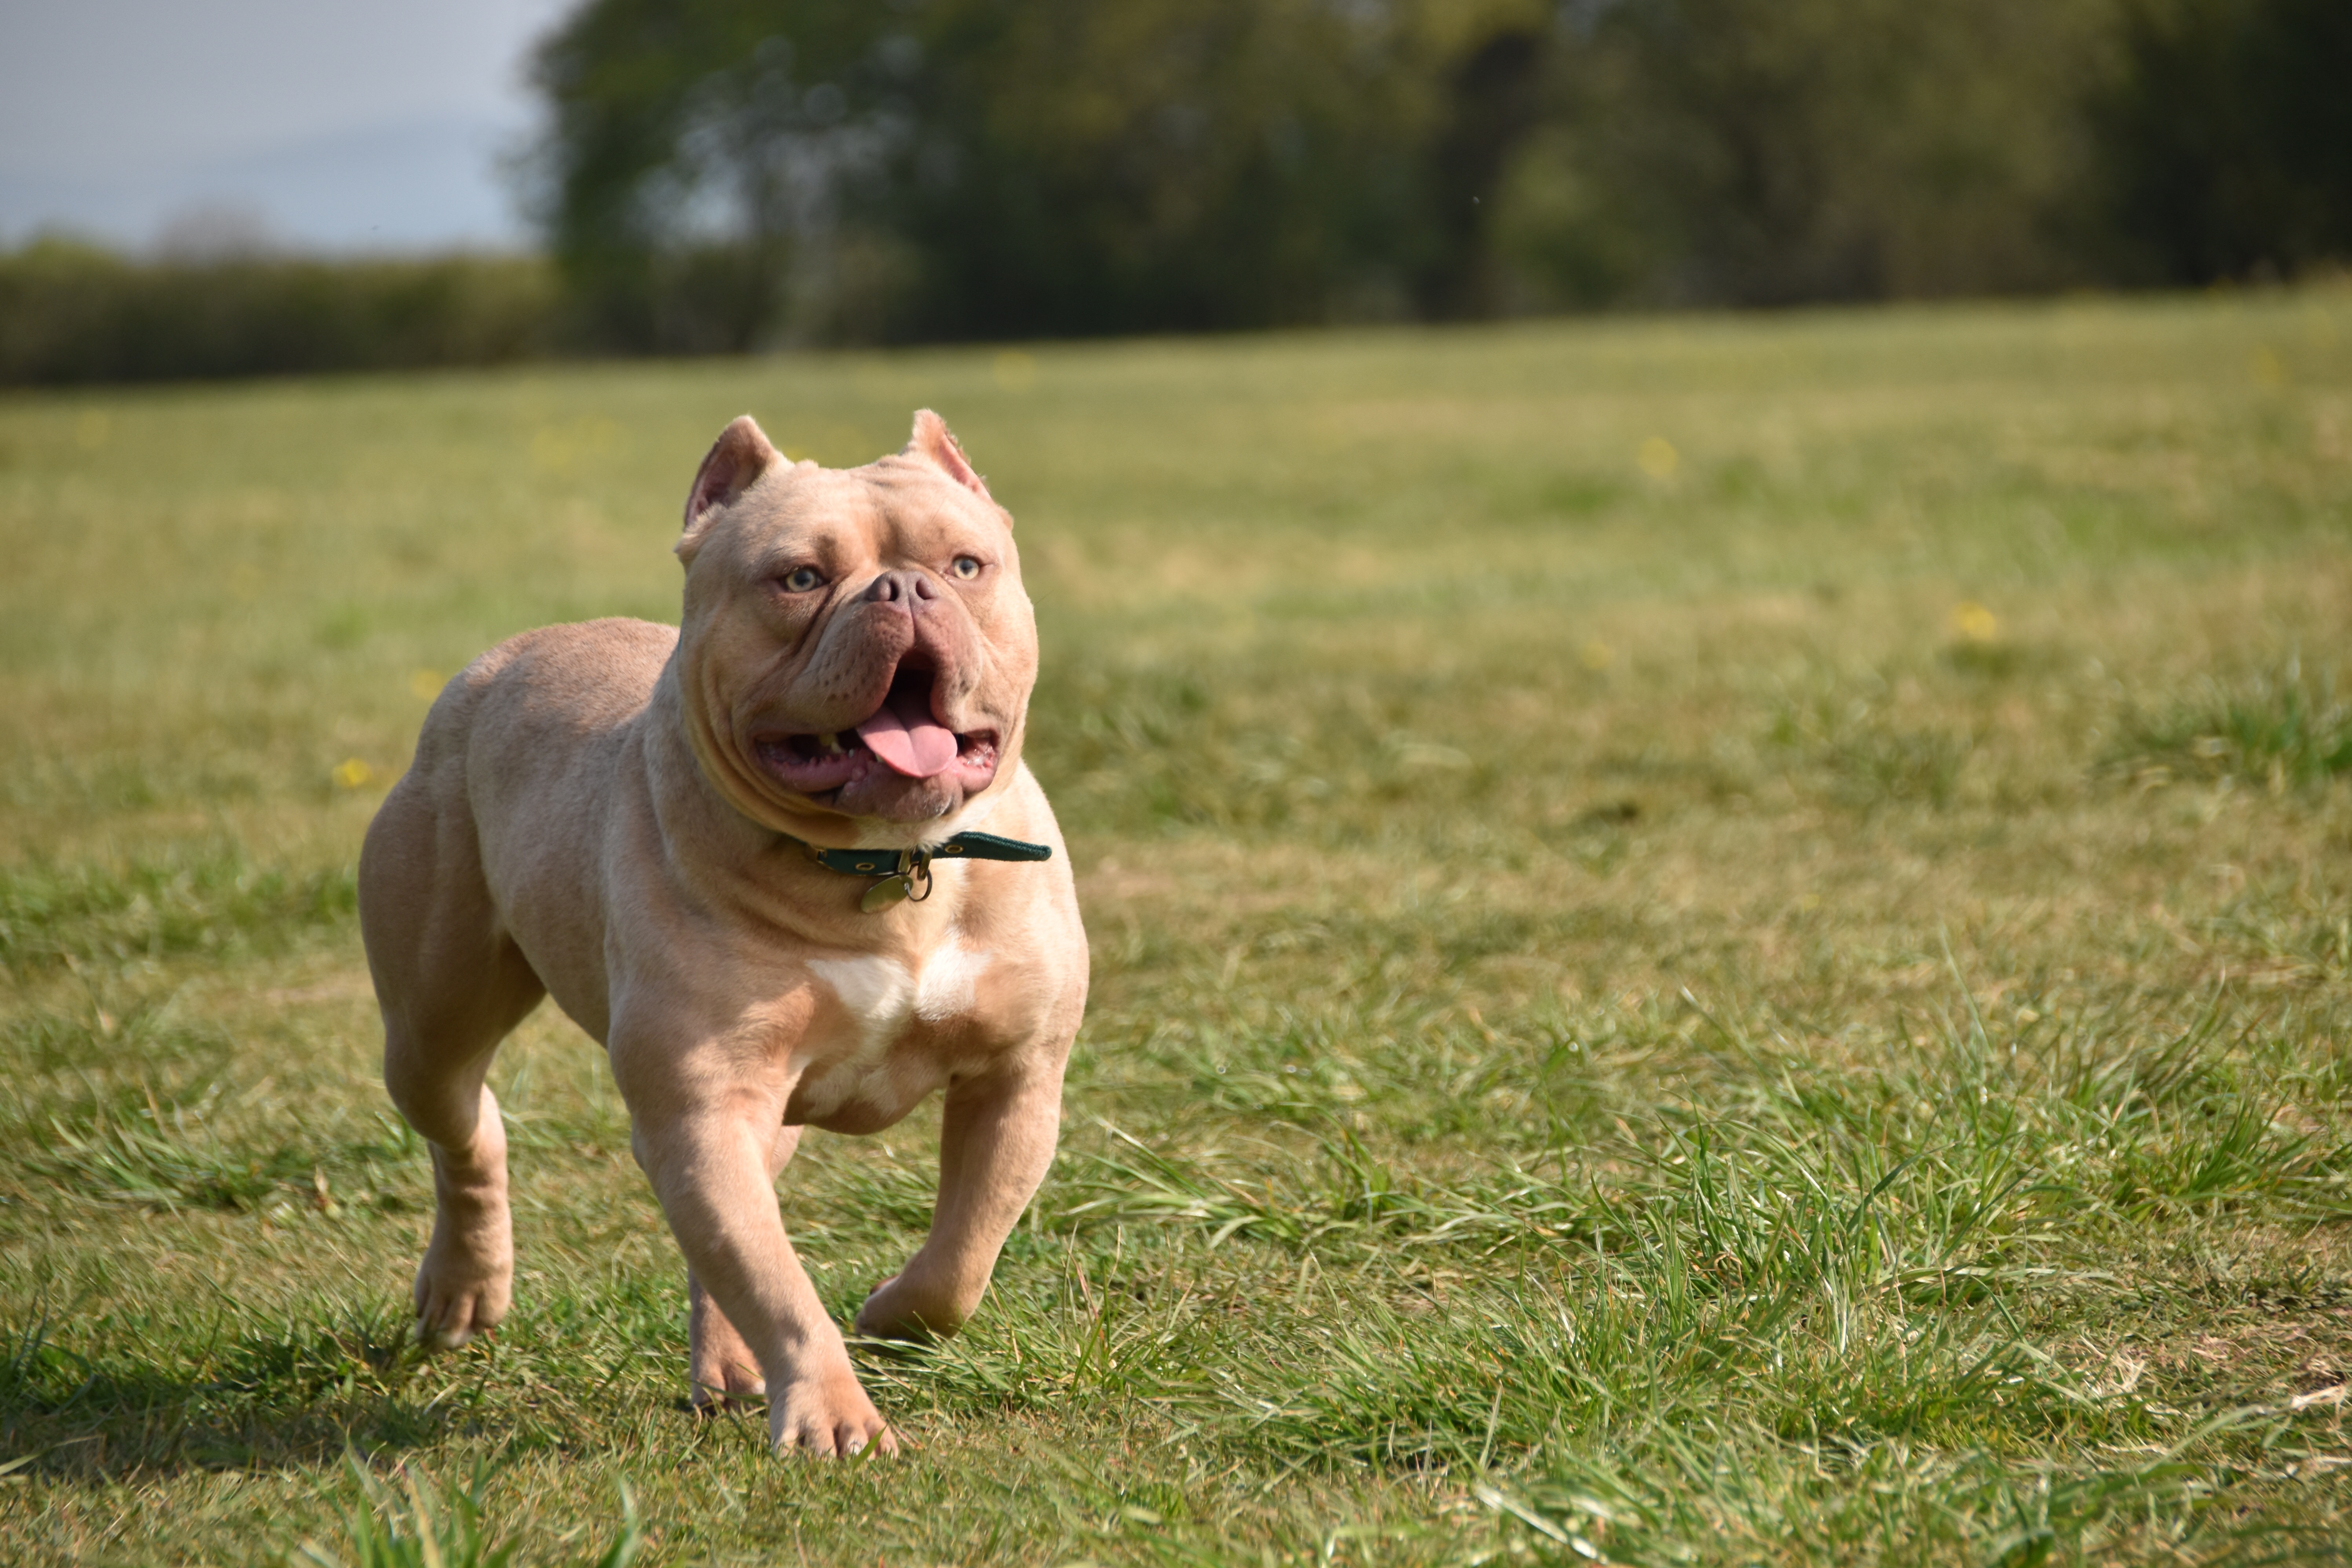 American Bully Behavioural Training Dog Training 4uBlog